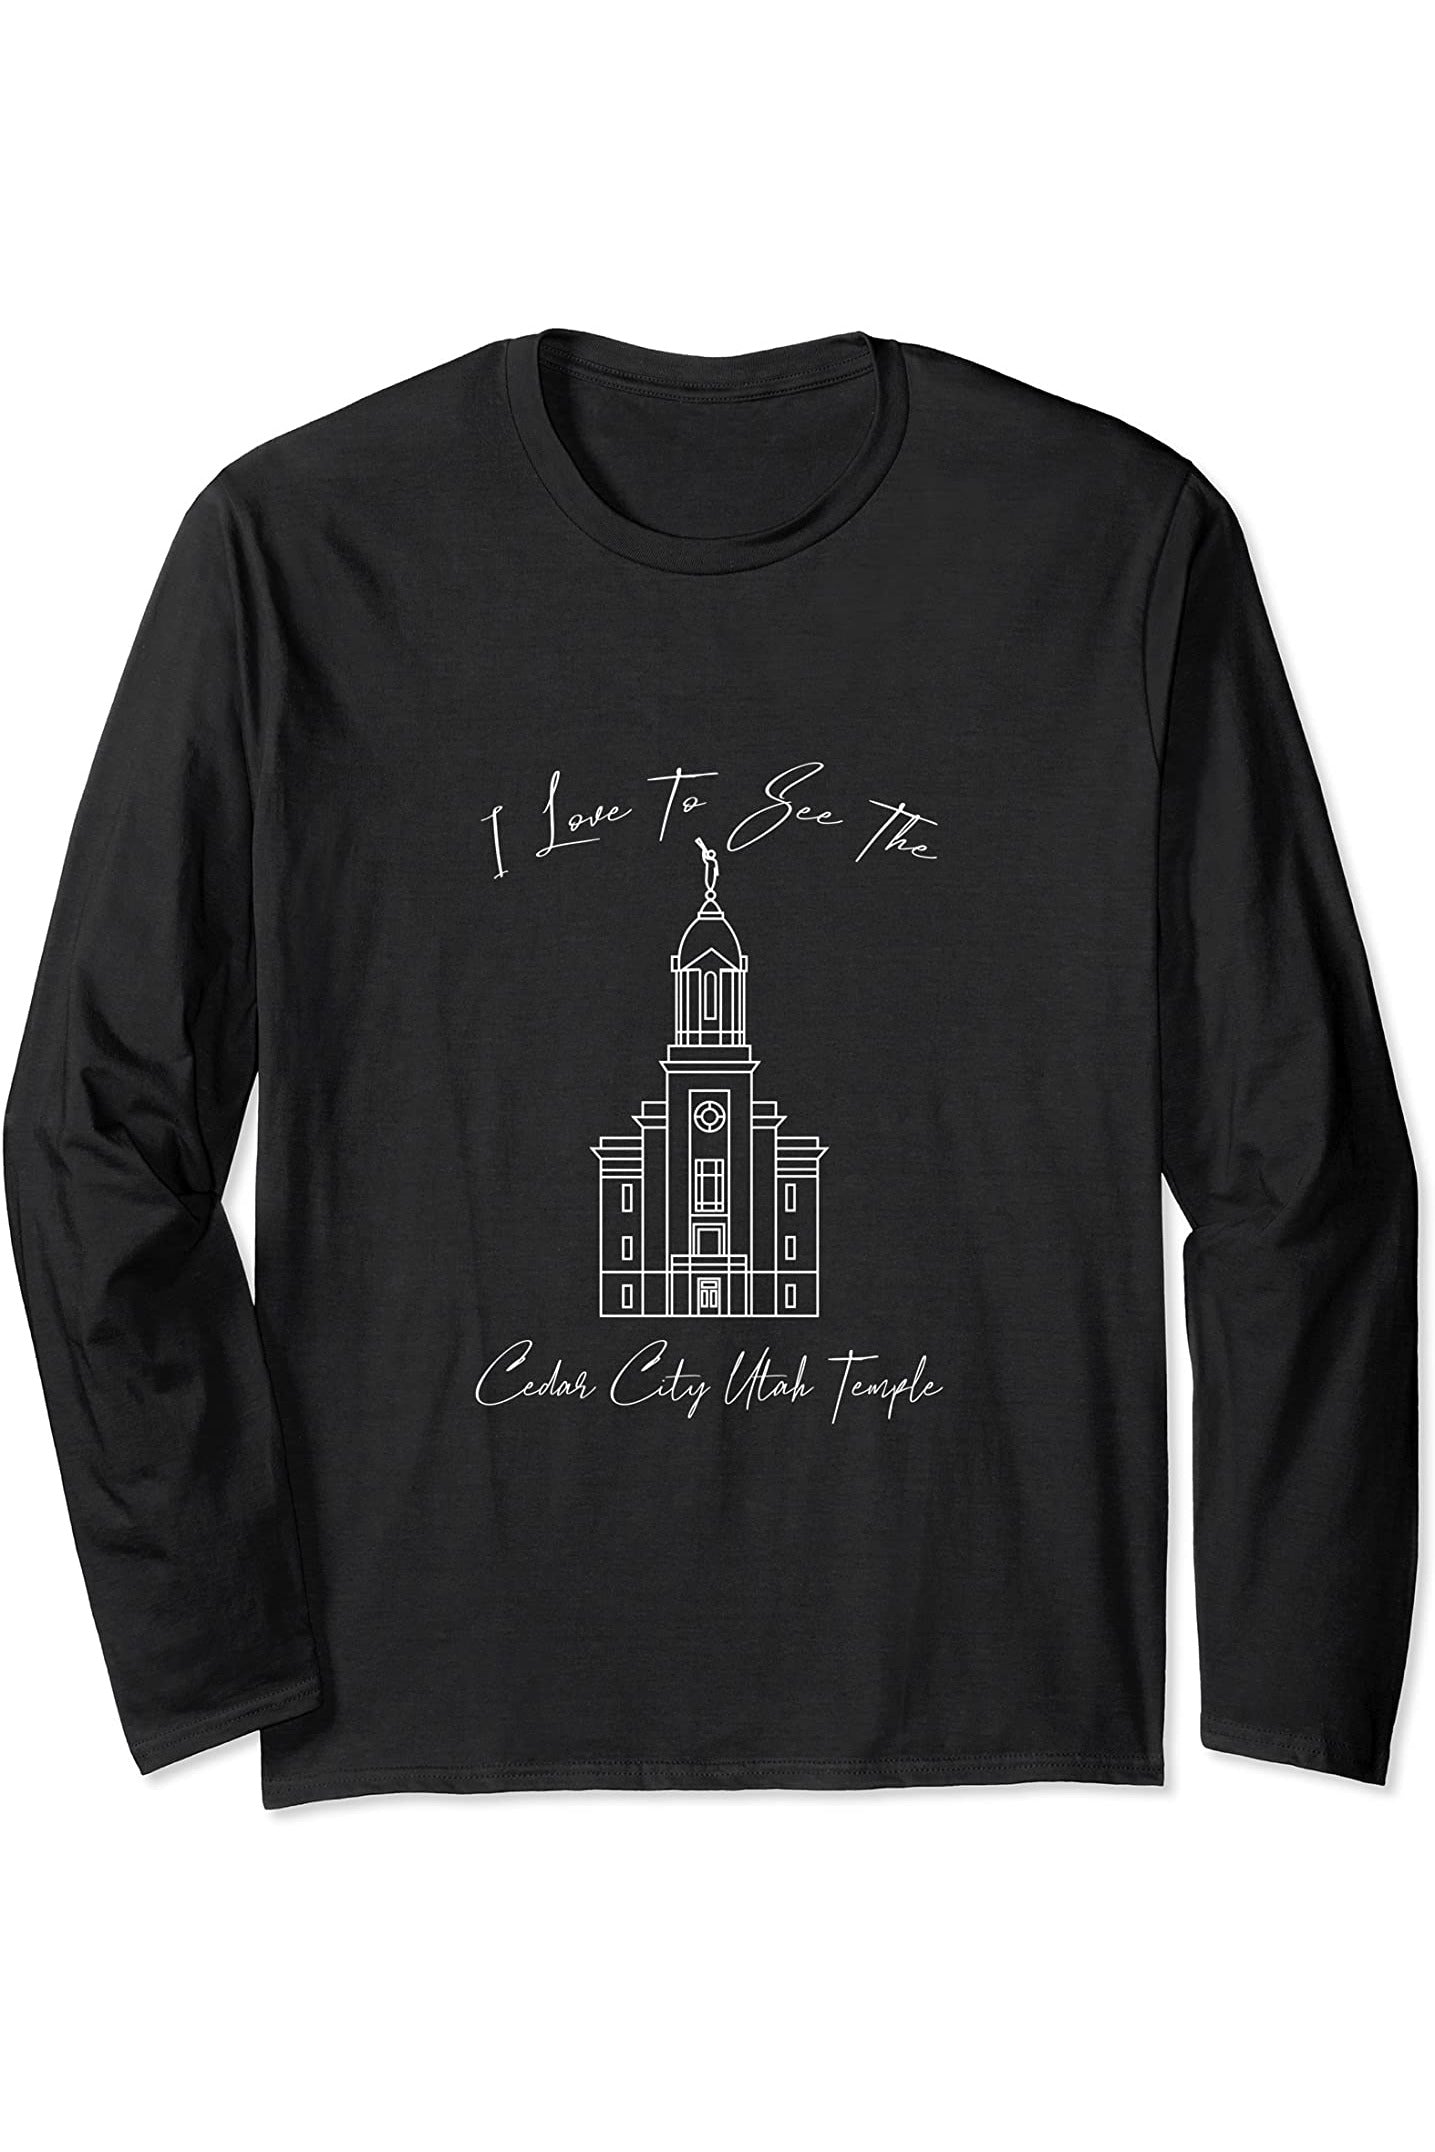 Cedar City Utah Temple Long Sleeve T-Shirt - Calligraphy Style (English) US